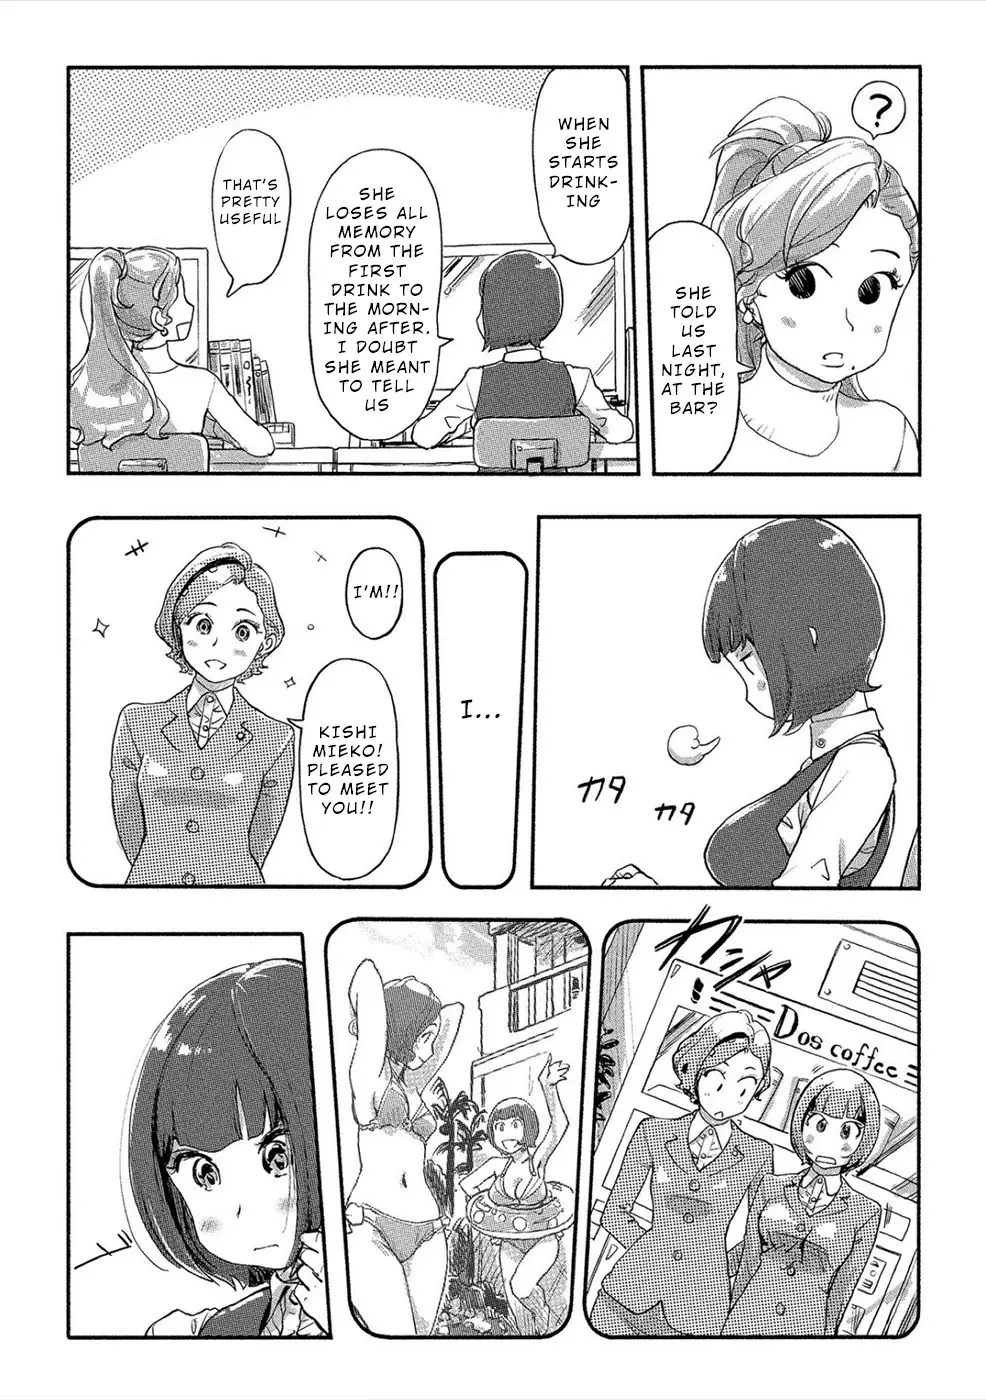 The Chief Kishi Mieko - 24 page 6-dd8cd7a8